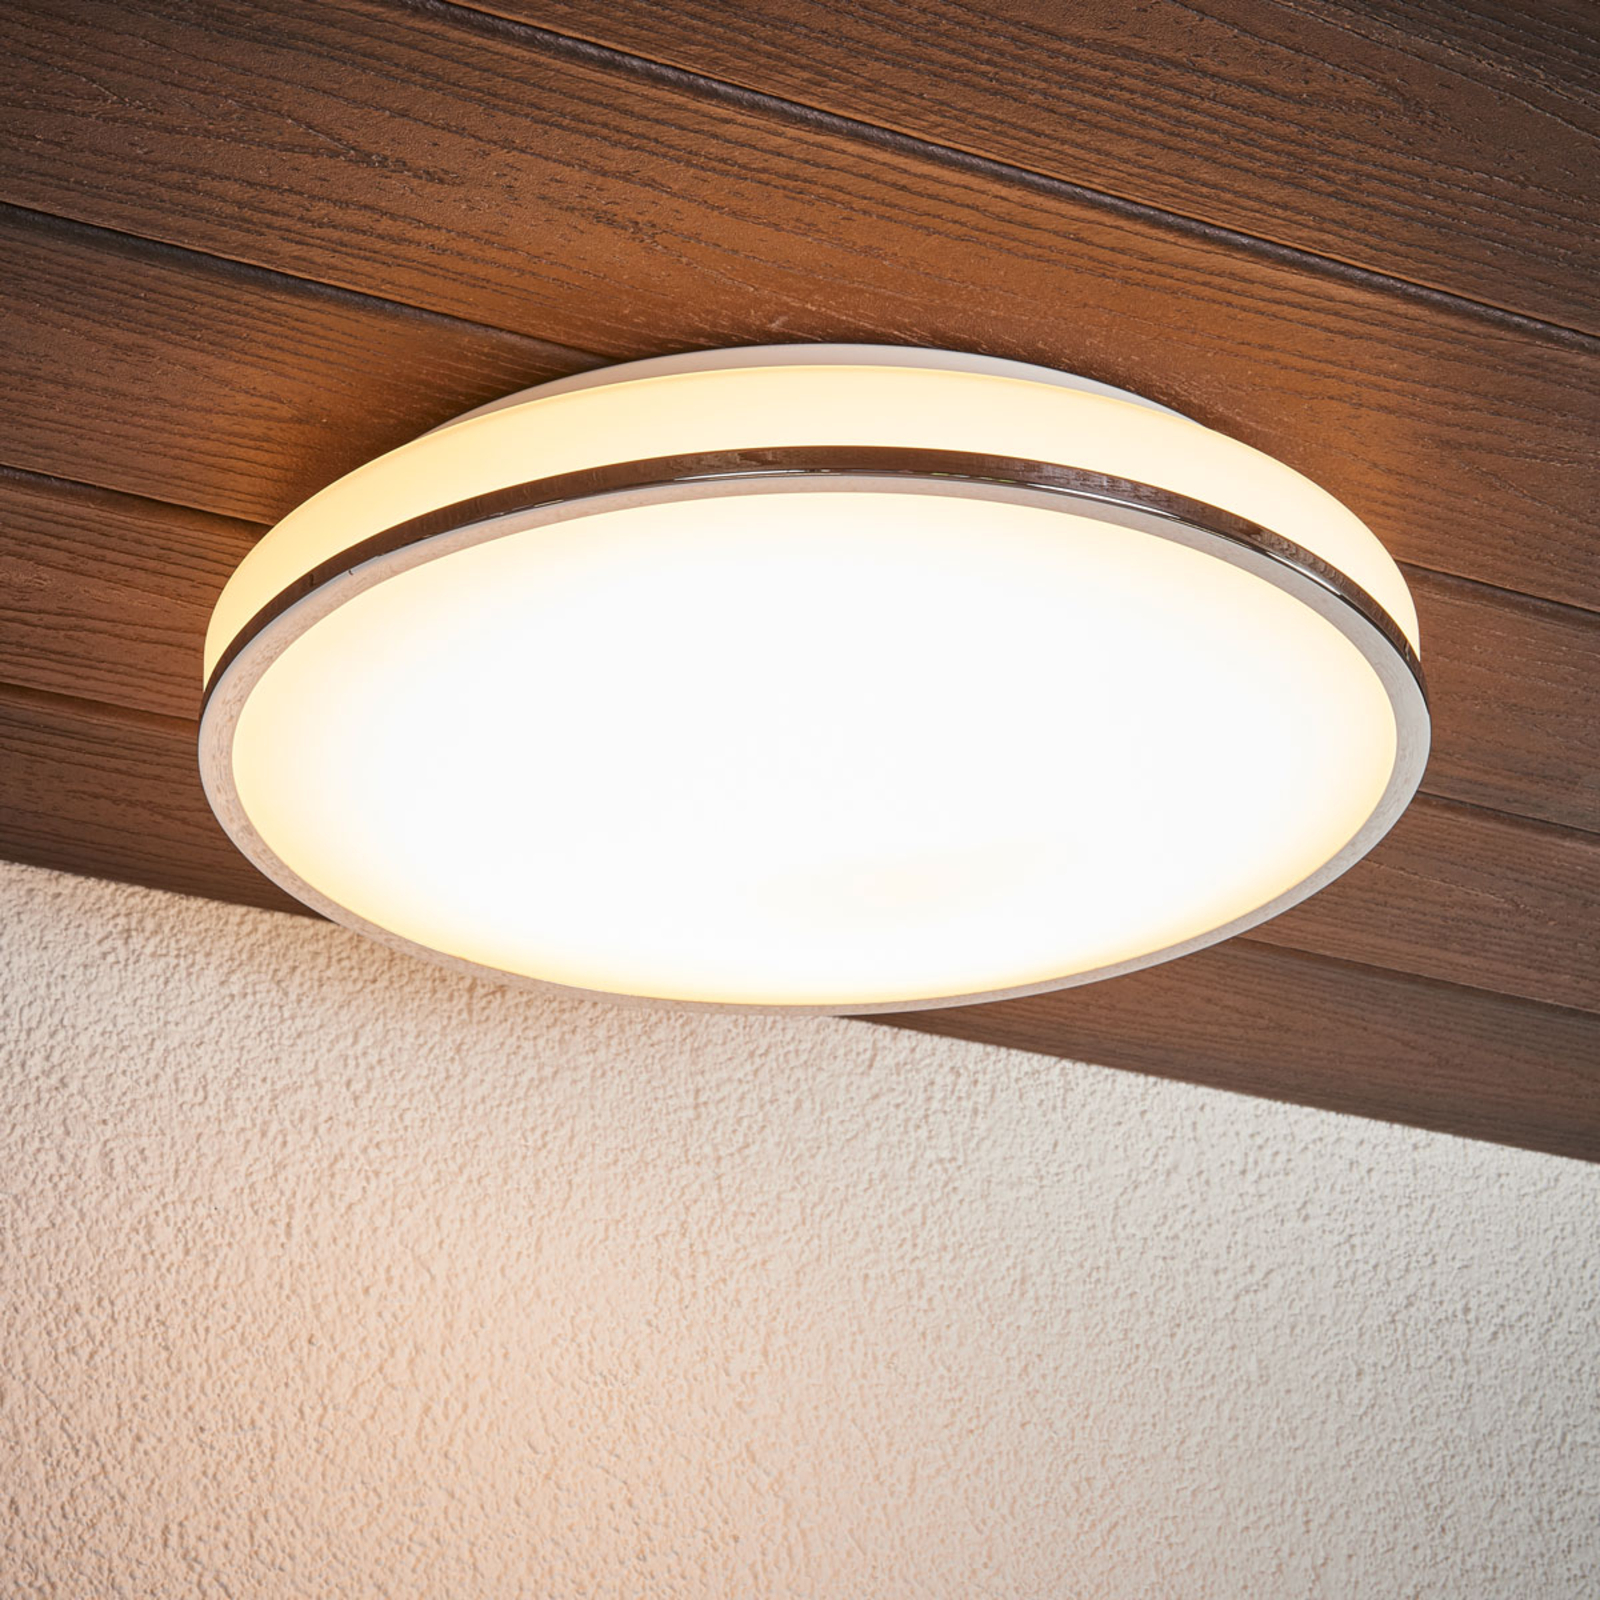 Badrumslampa Lyss med lysdioder